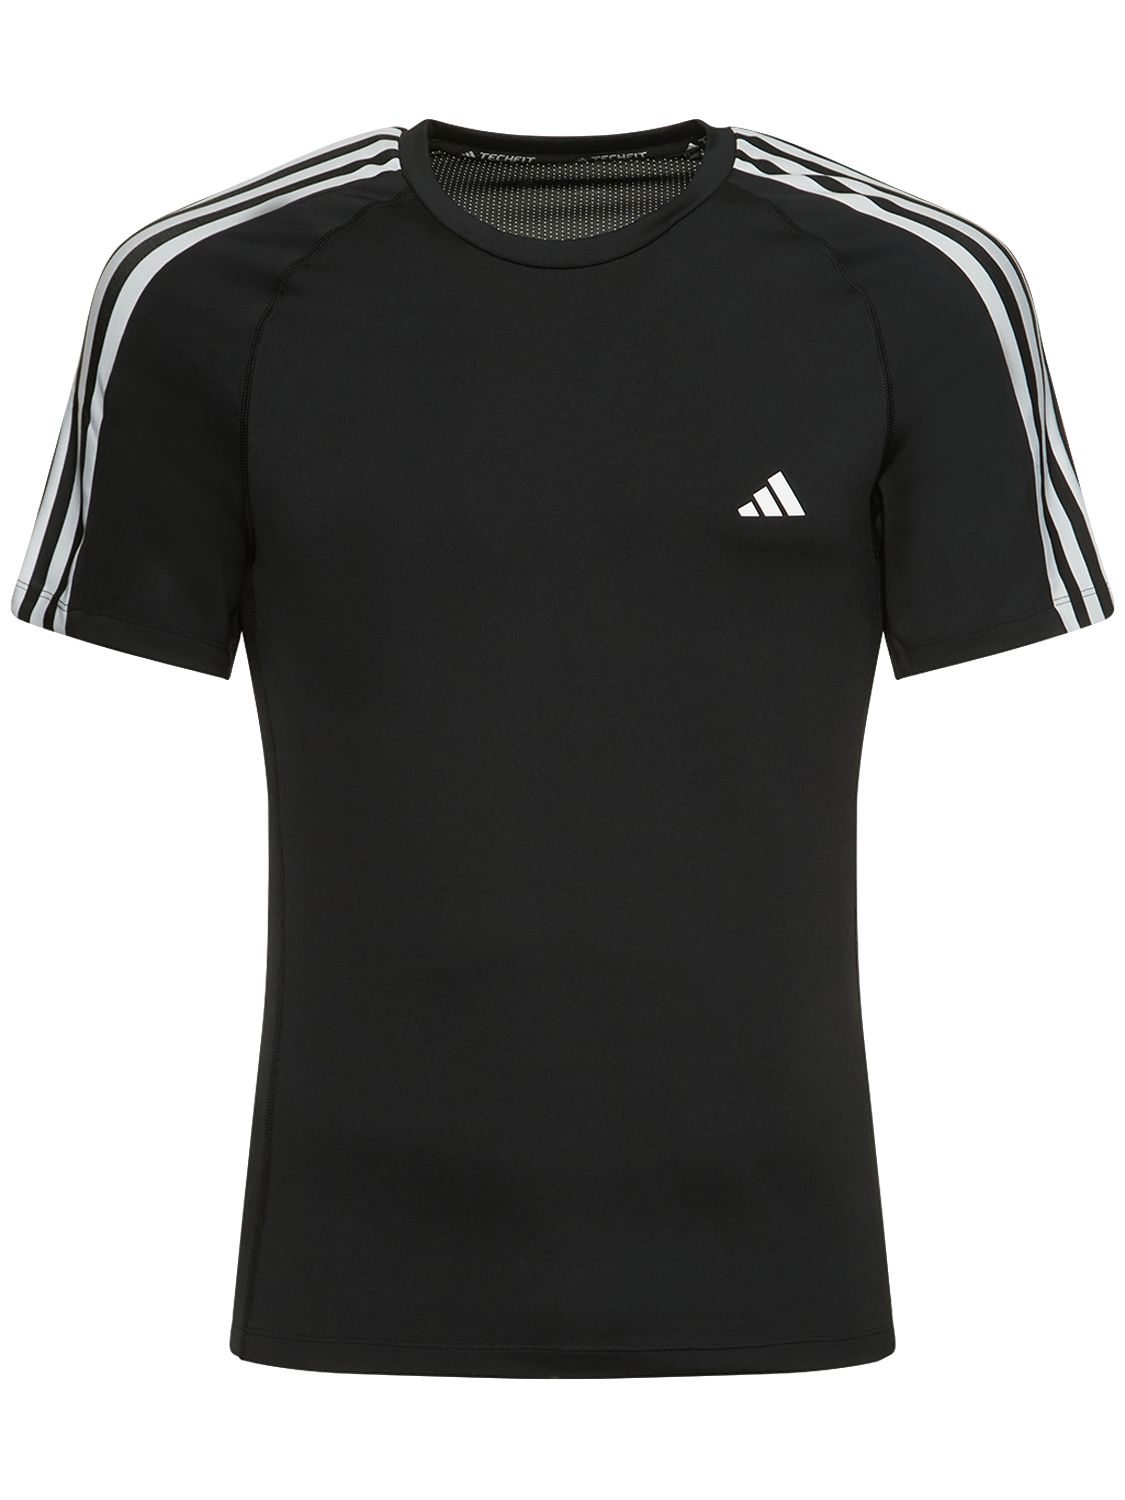 Adidas Originals 3 Stripes Tech T-shirt In Black